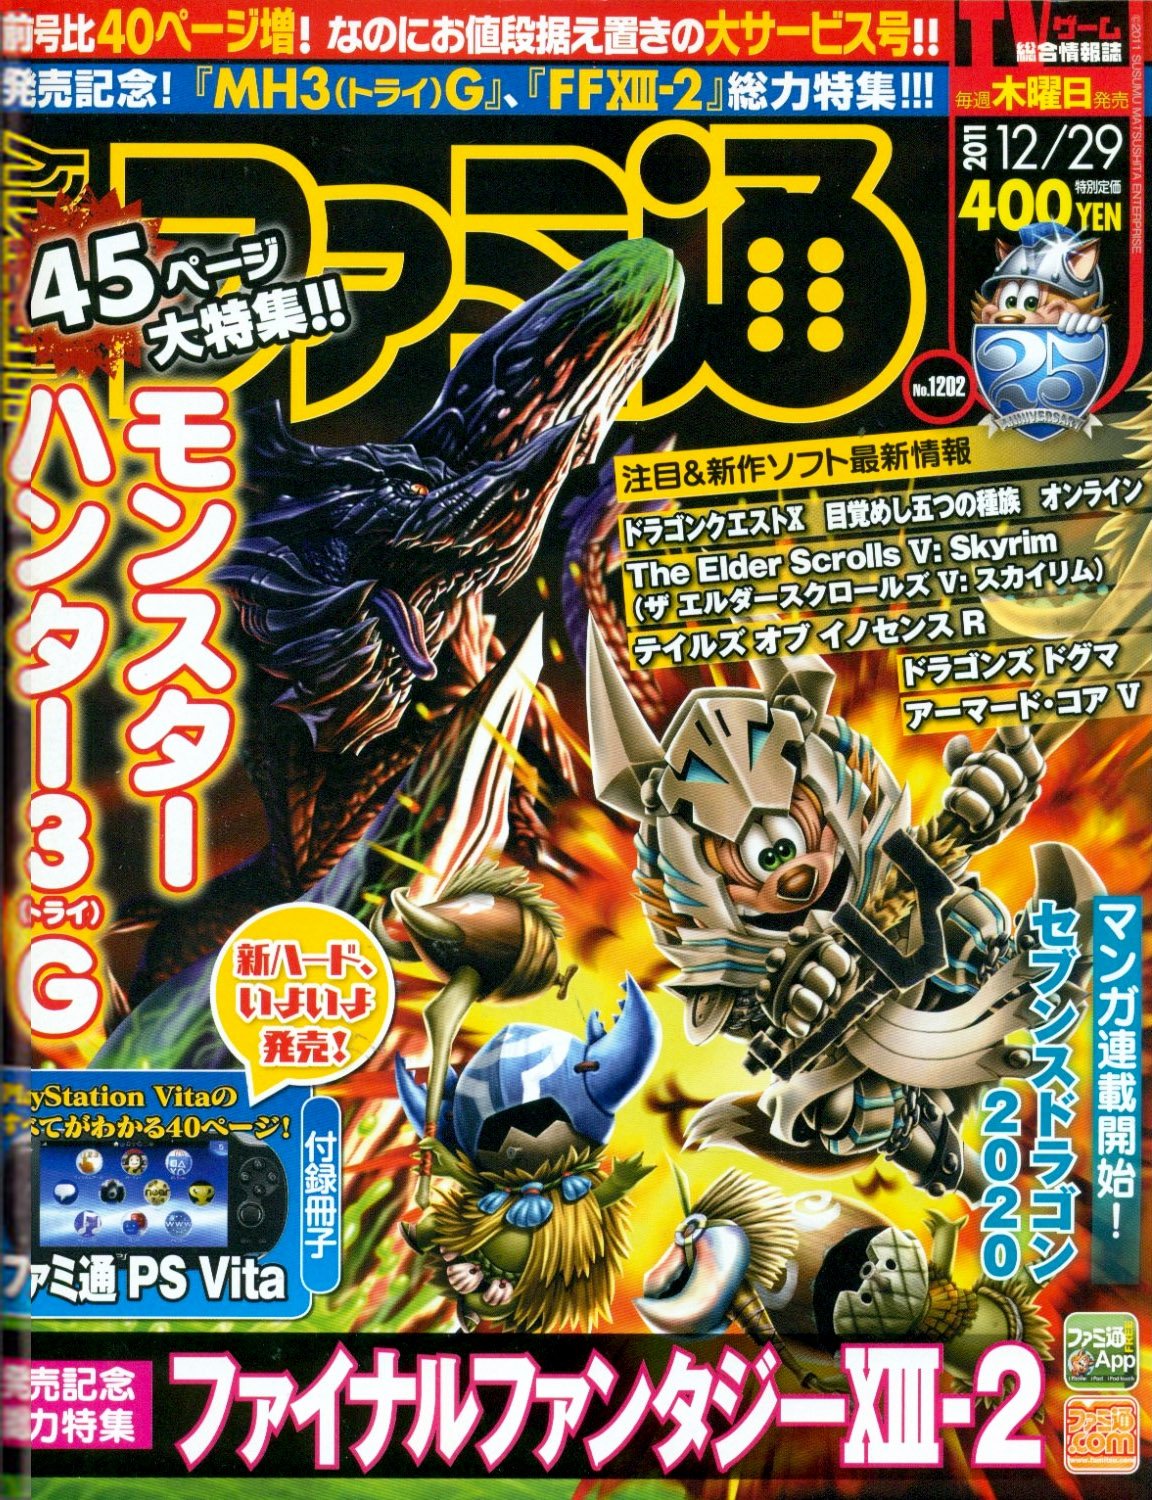 Famitsu 1202 (December 29, 2011)